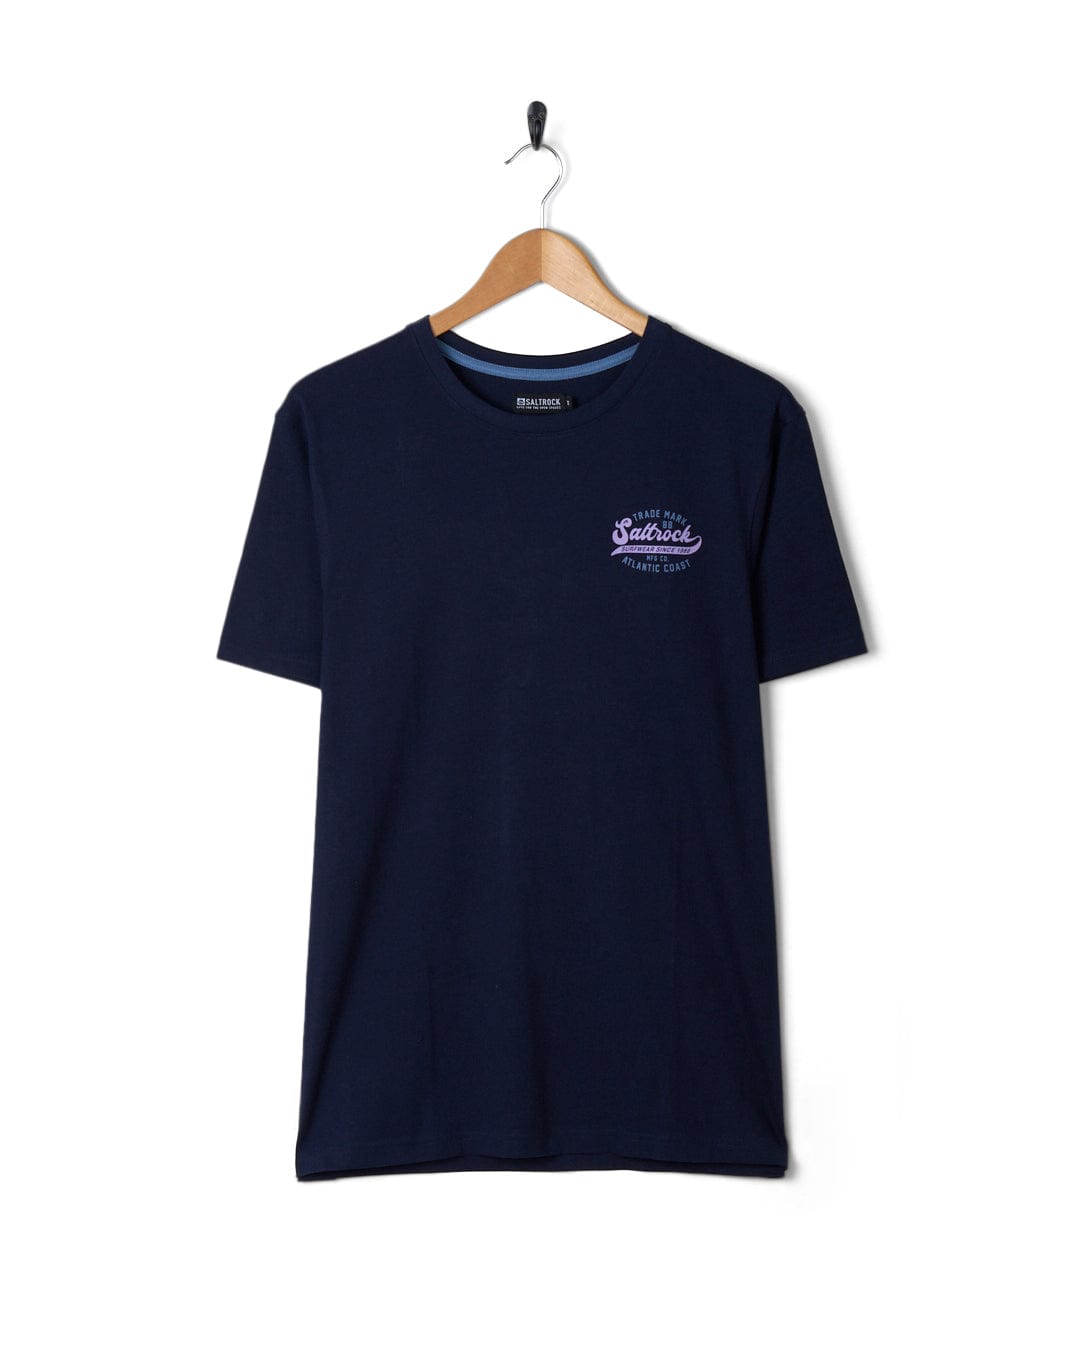 Dark blue Saltrock Home Run t-shirt on a hanger against a white background.